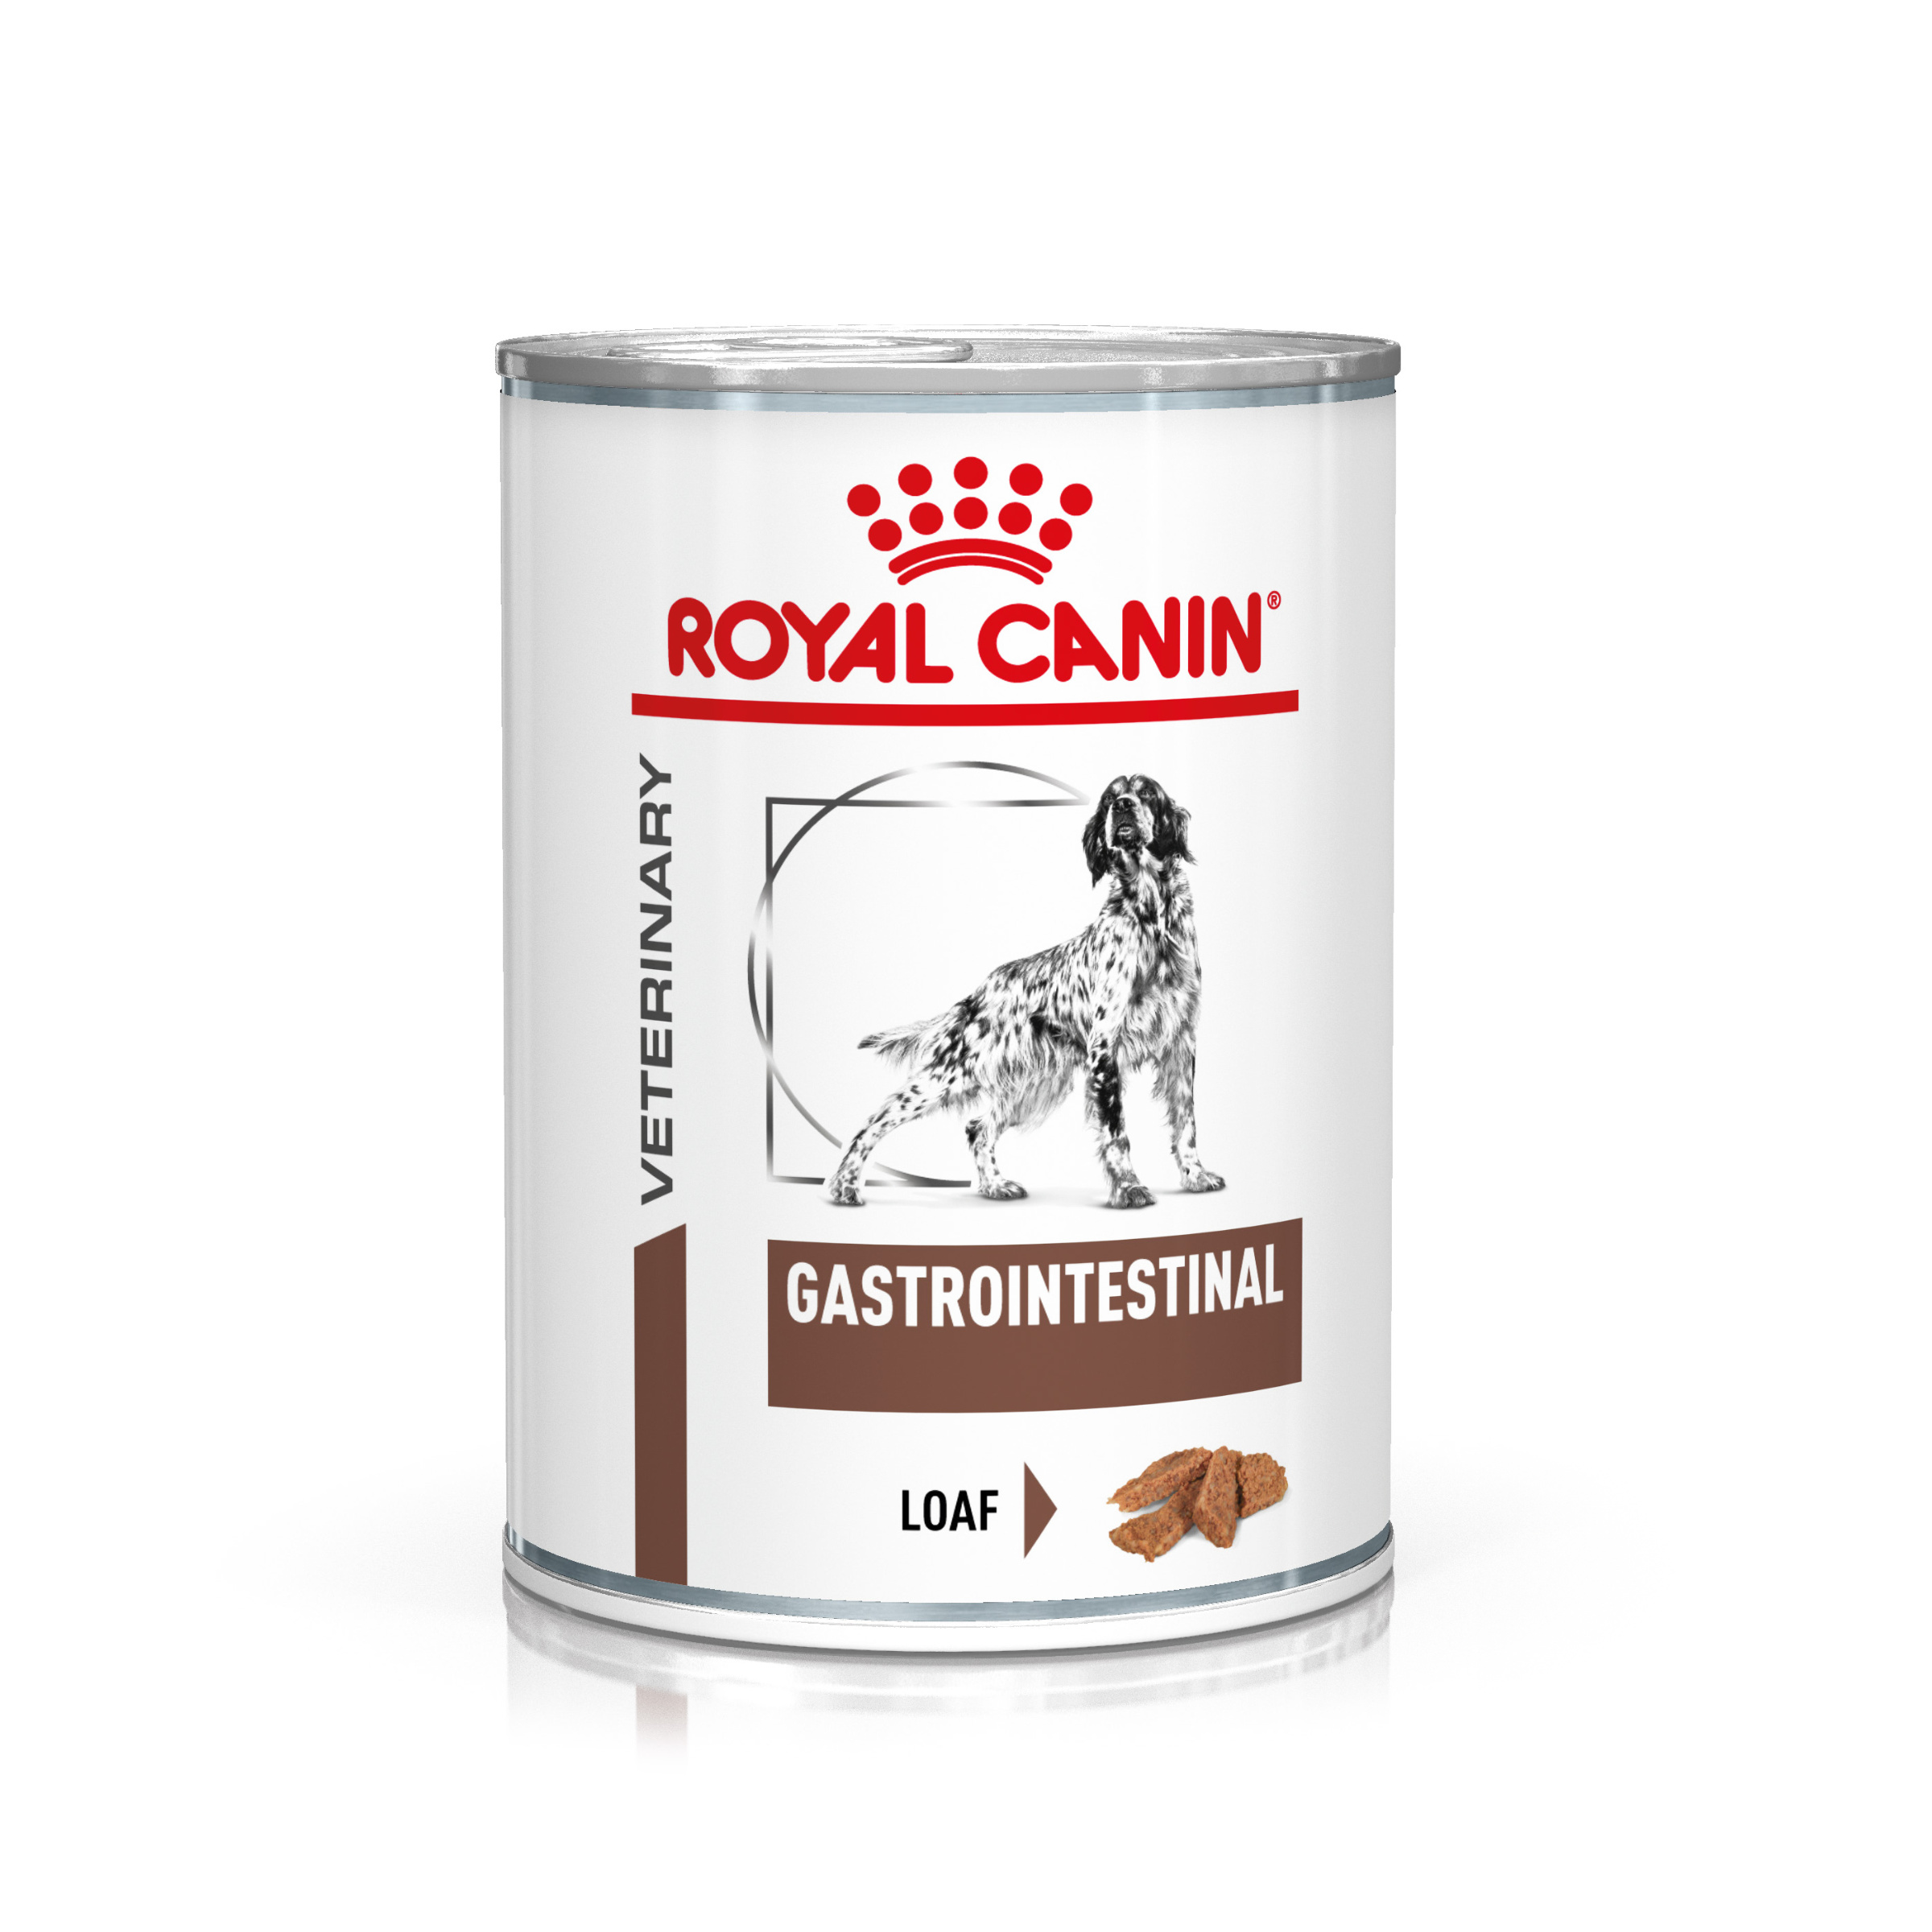 ROYAL CANIN Veterinary GASTROINTESTINAL Mousse Nassfutter für Hunde 1 Dose je 400g